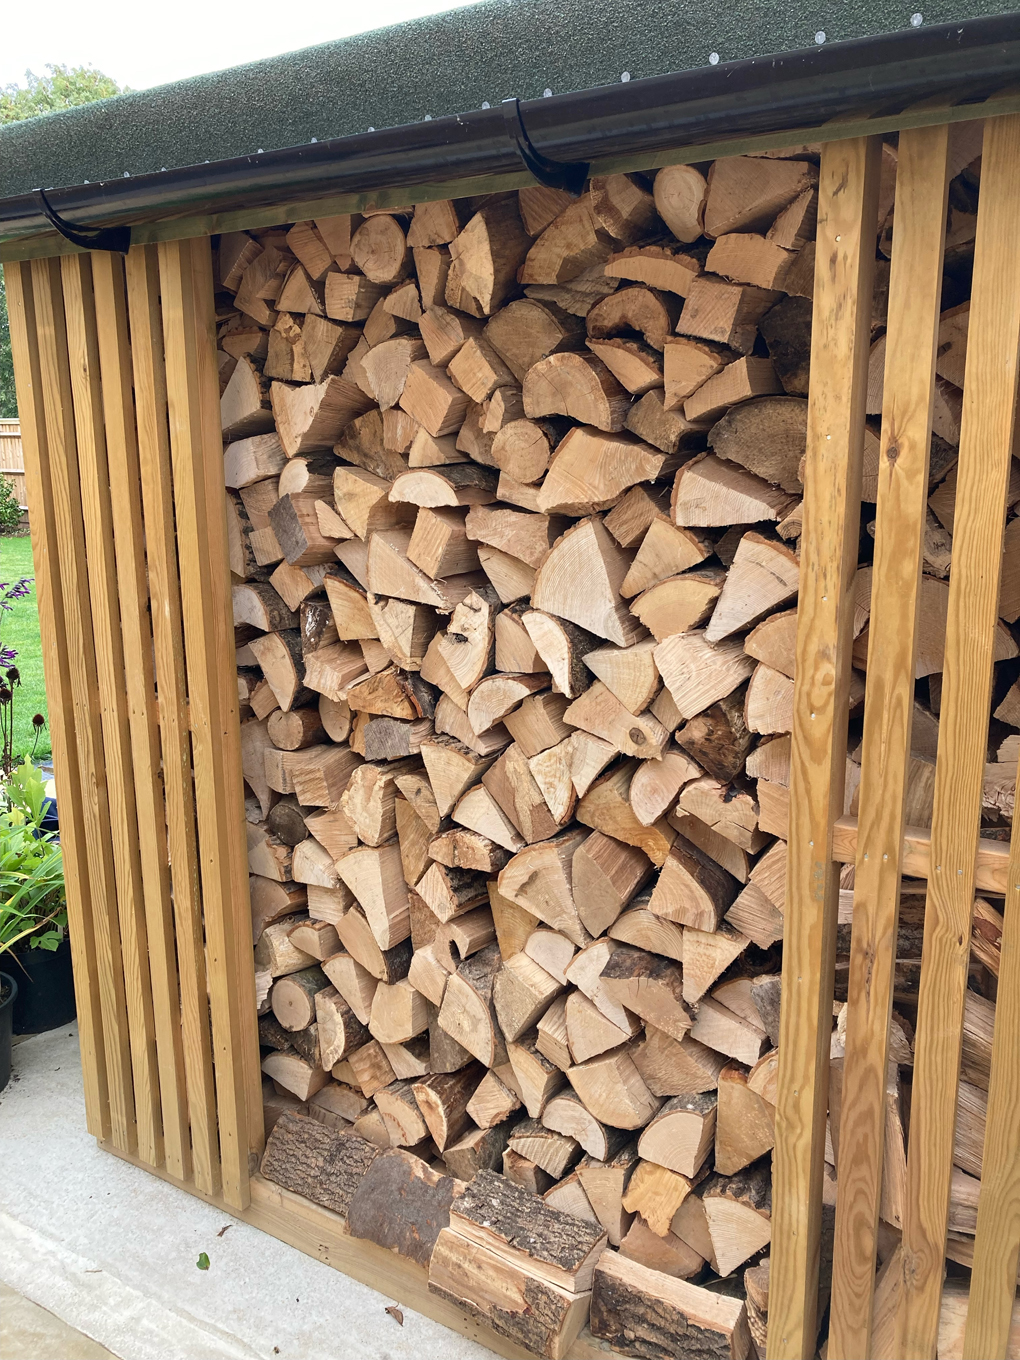 Logs in store